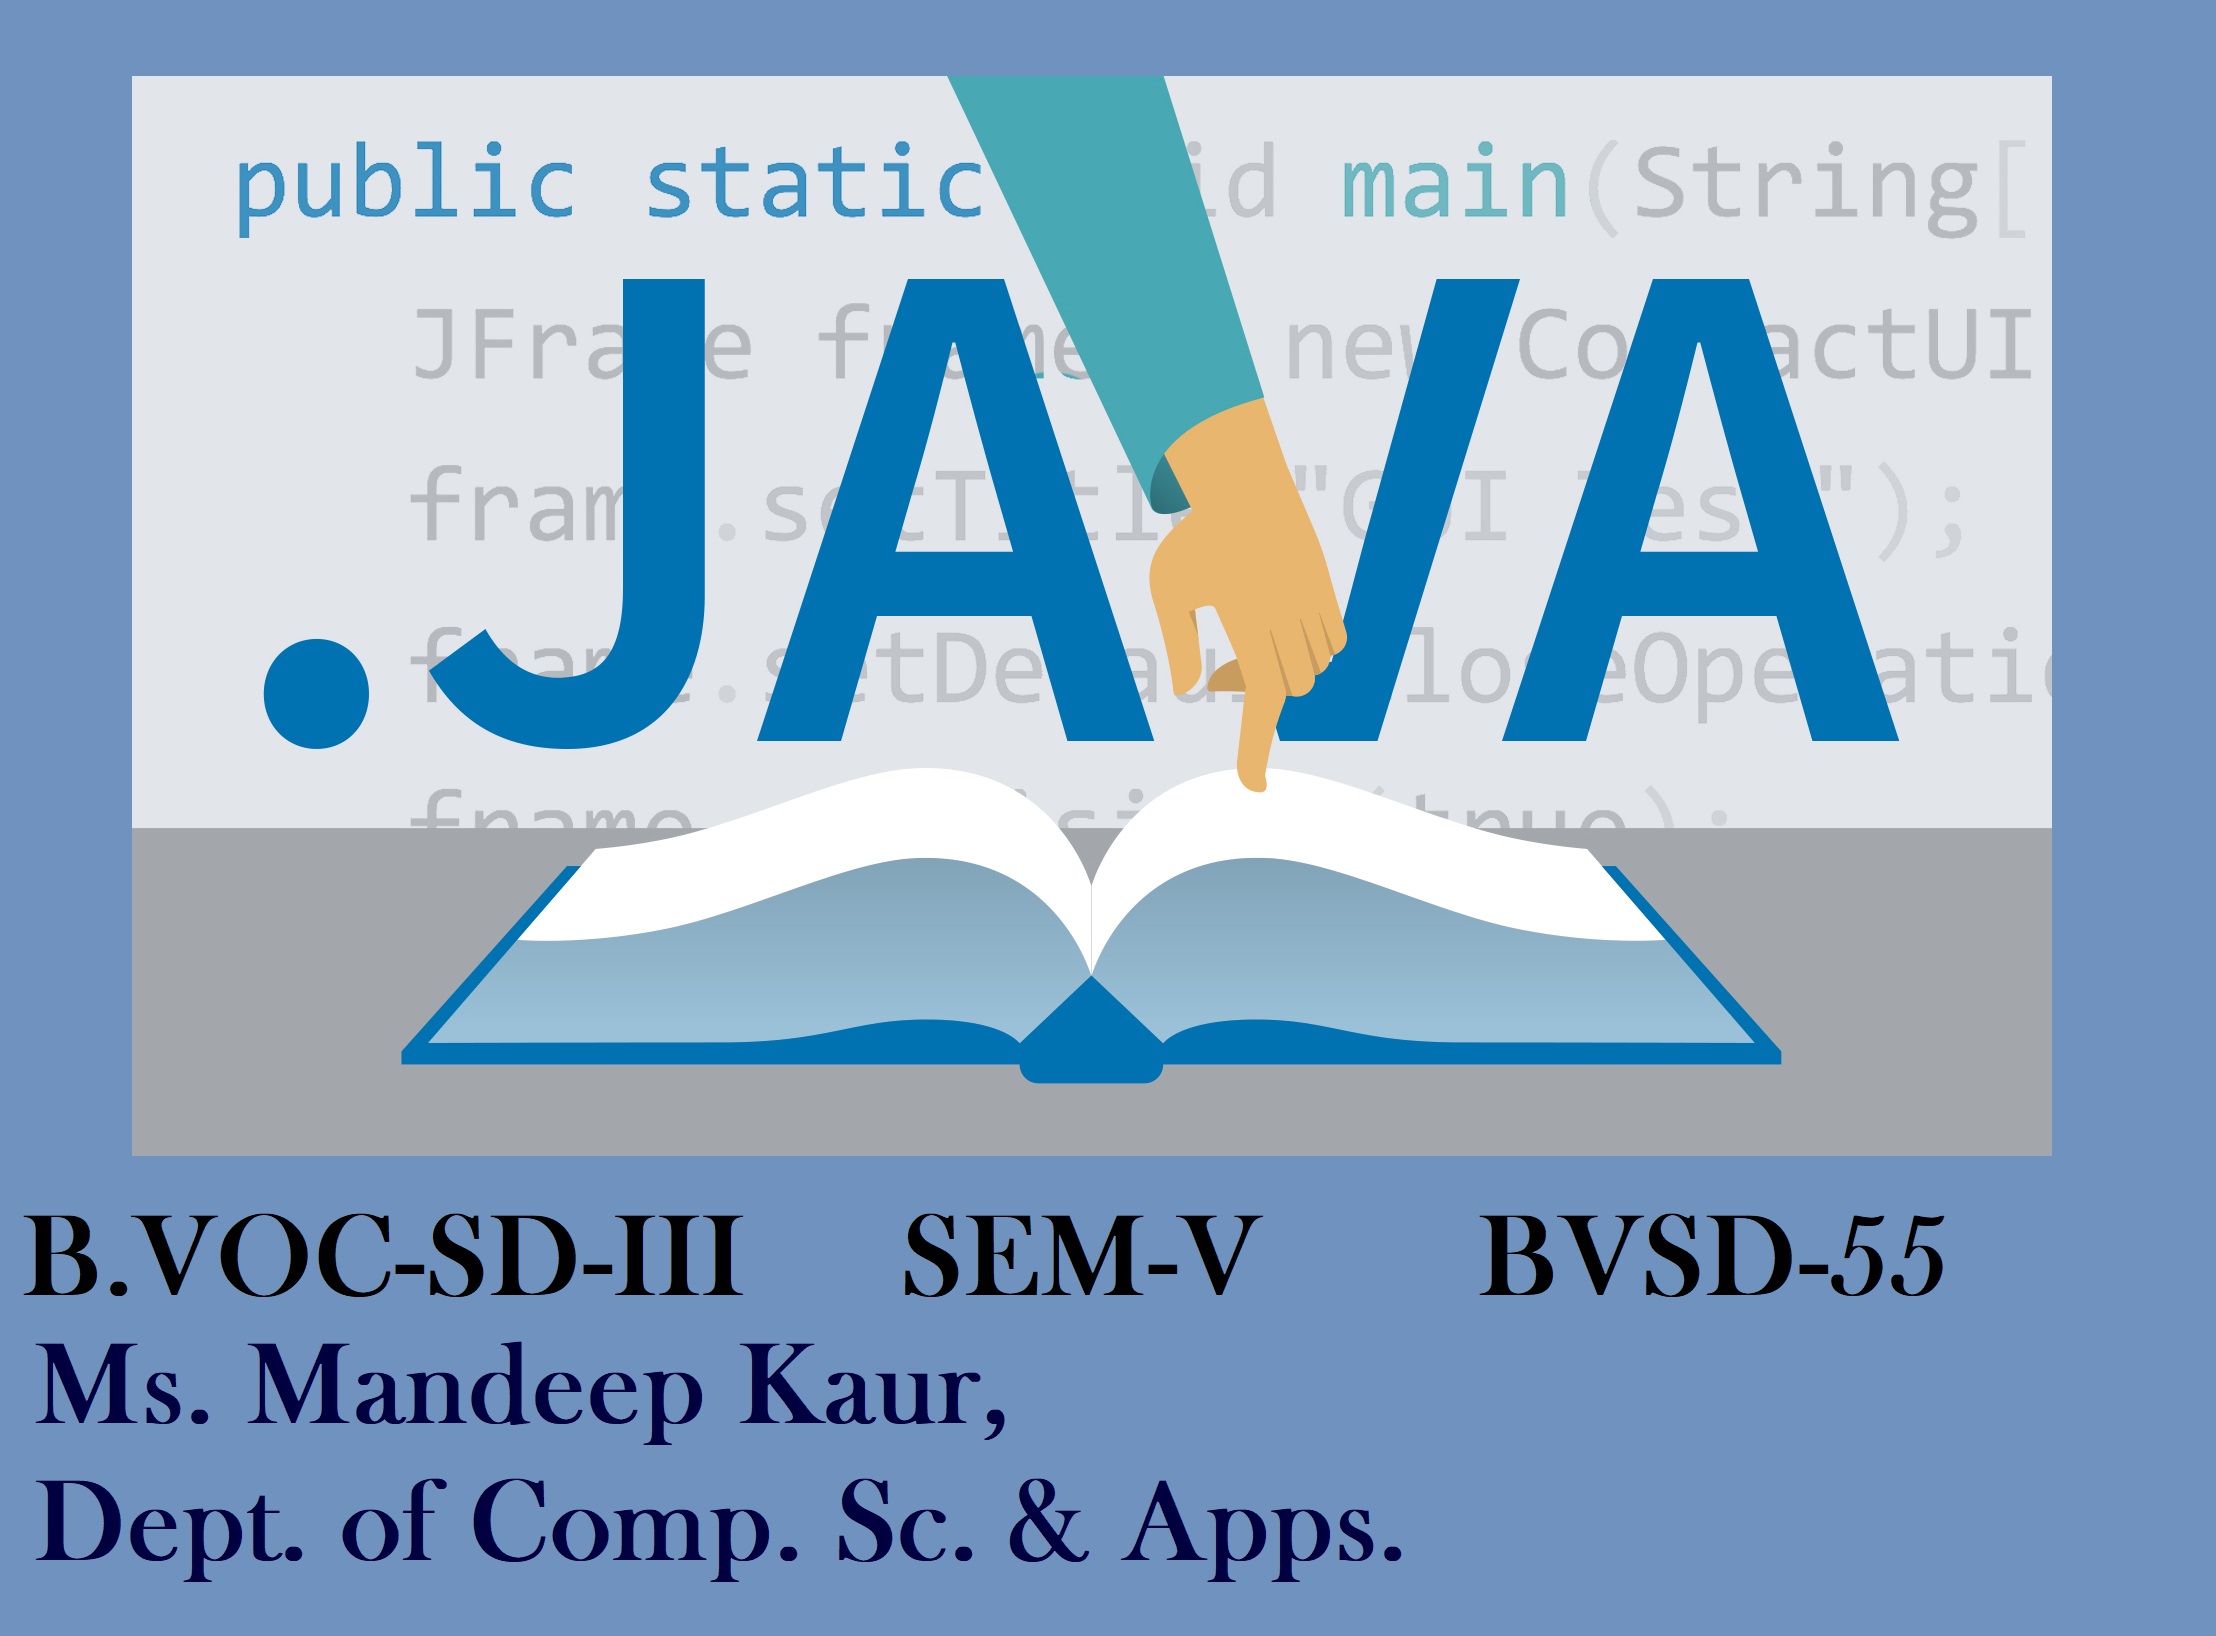 B.VOC-Software Development (Practical- Advanced Java)